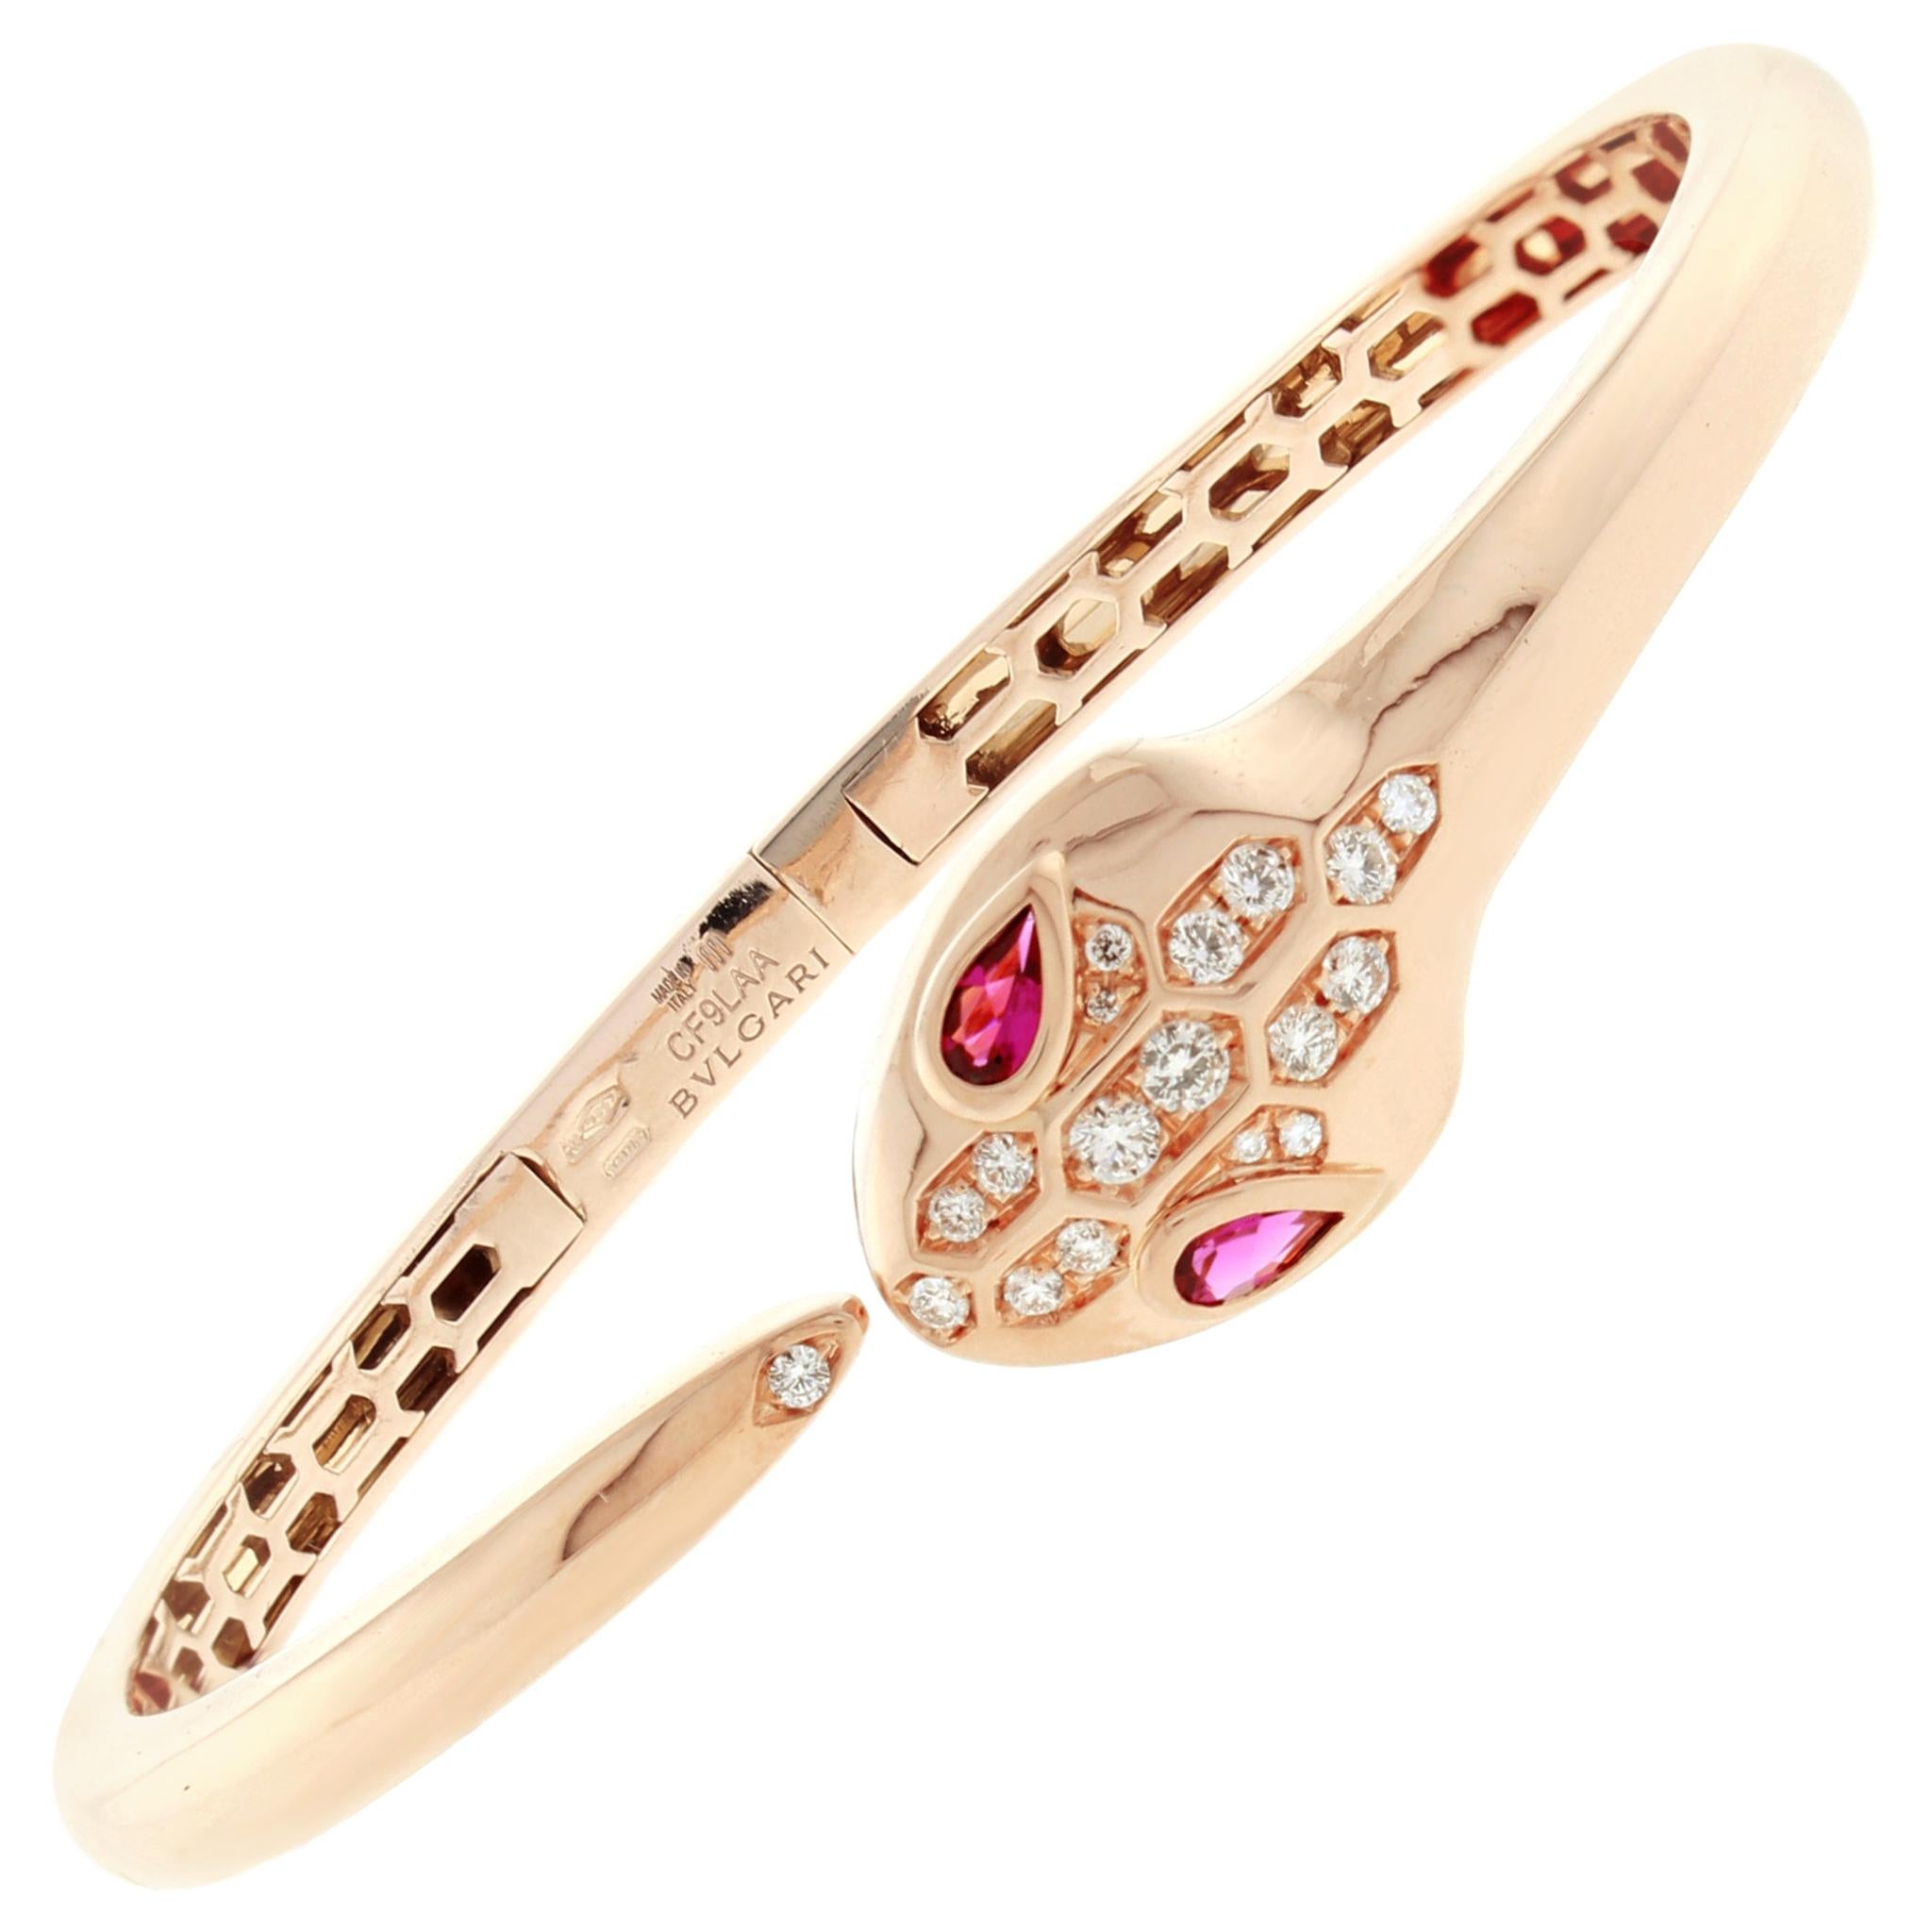 Bulgari Serpenti Rose Gold Diamond Bracelet